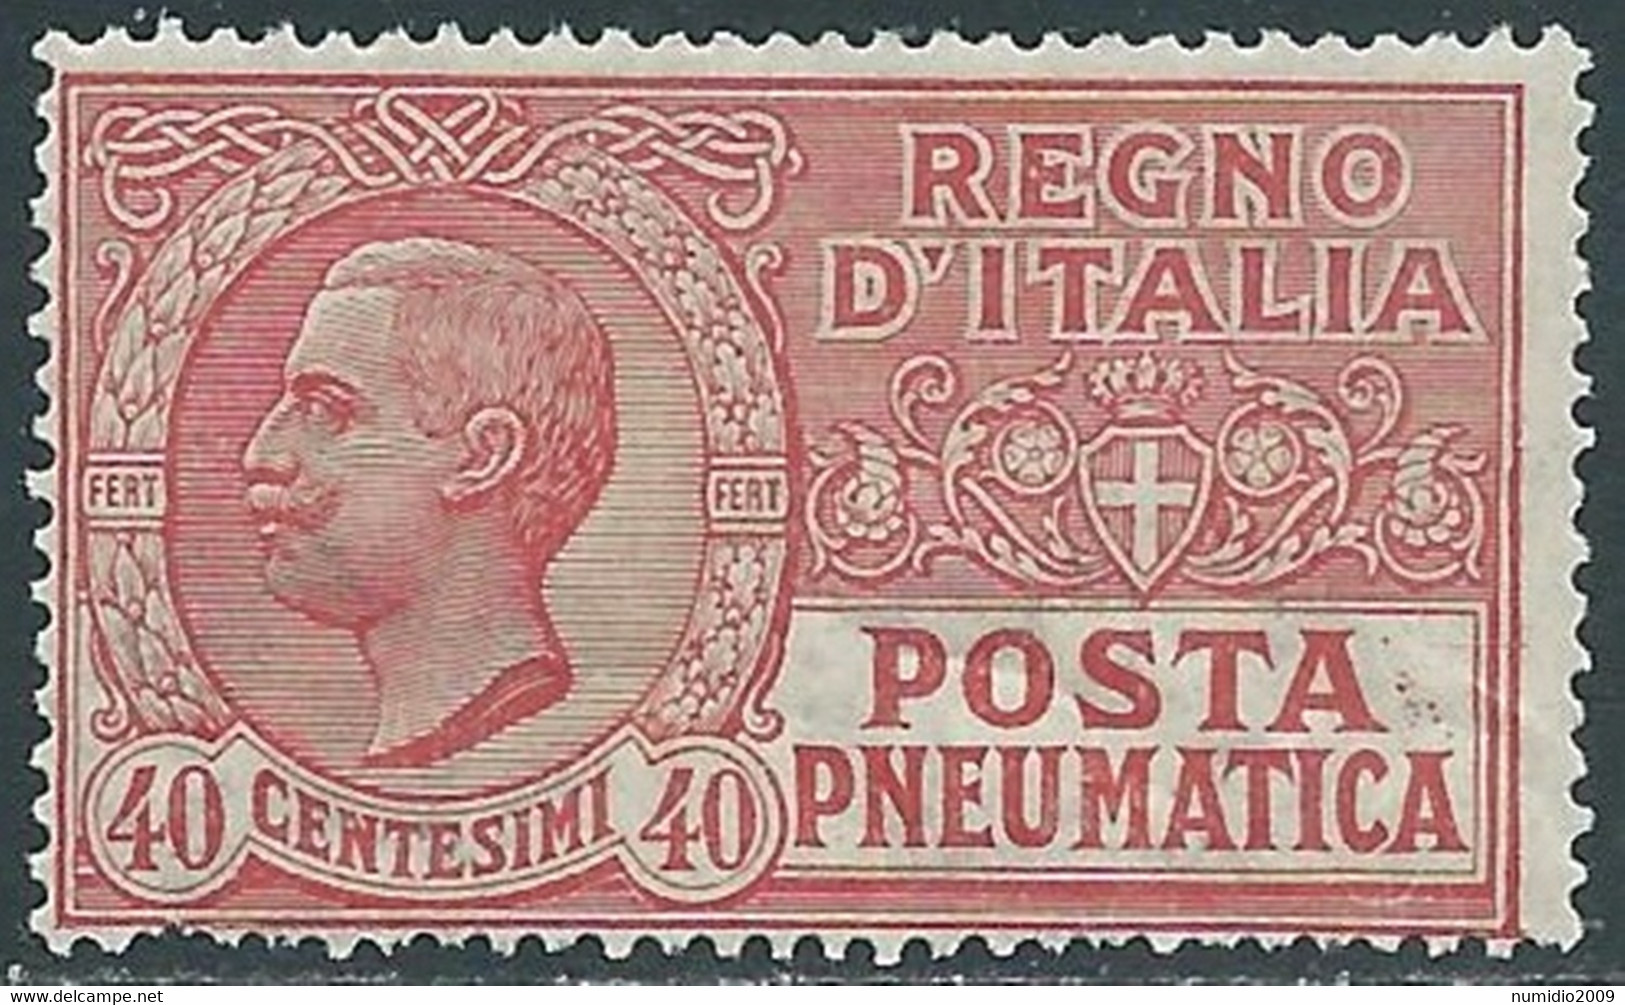 1925 REGNO POSTA PNEUMATICA 40 CENT MNH ** - RE18-3 - Pneumatic Mail